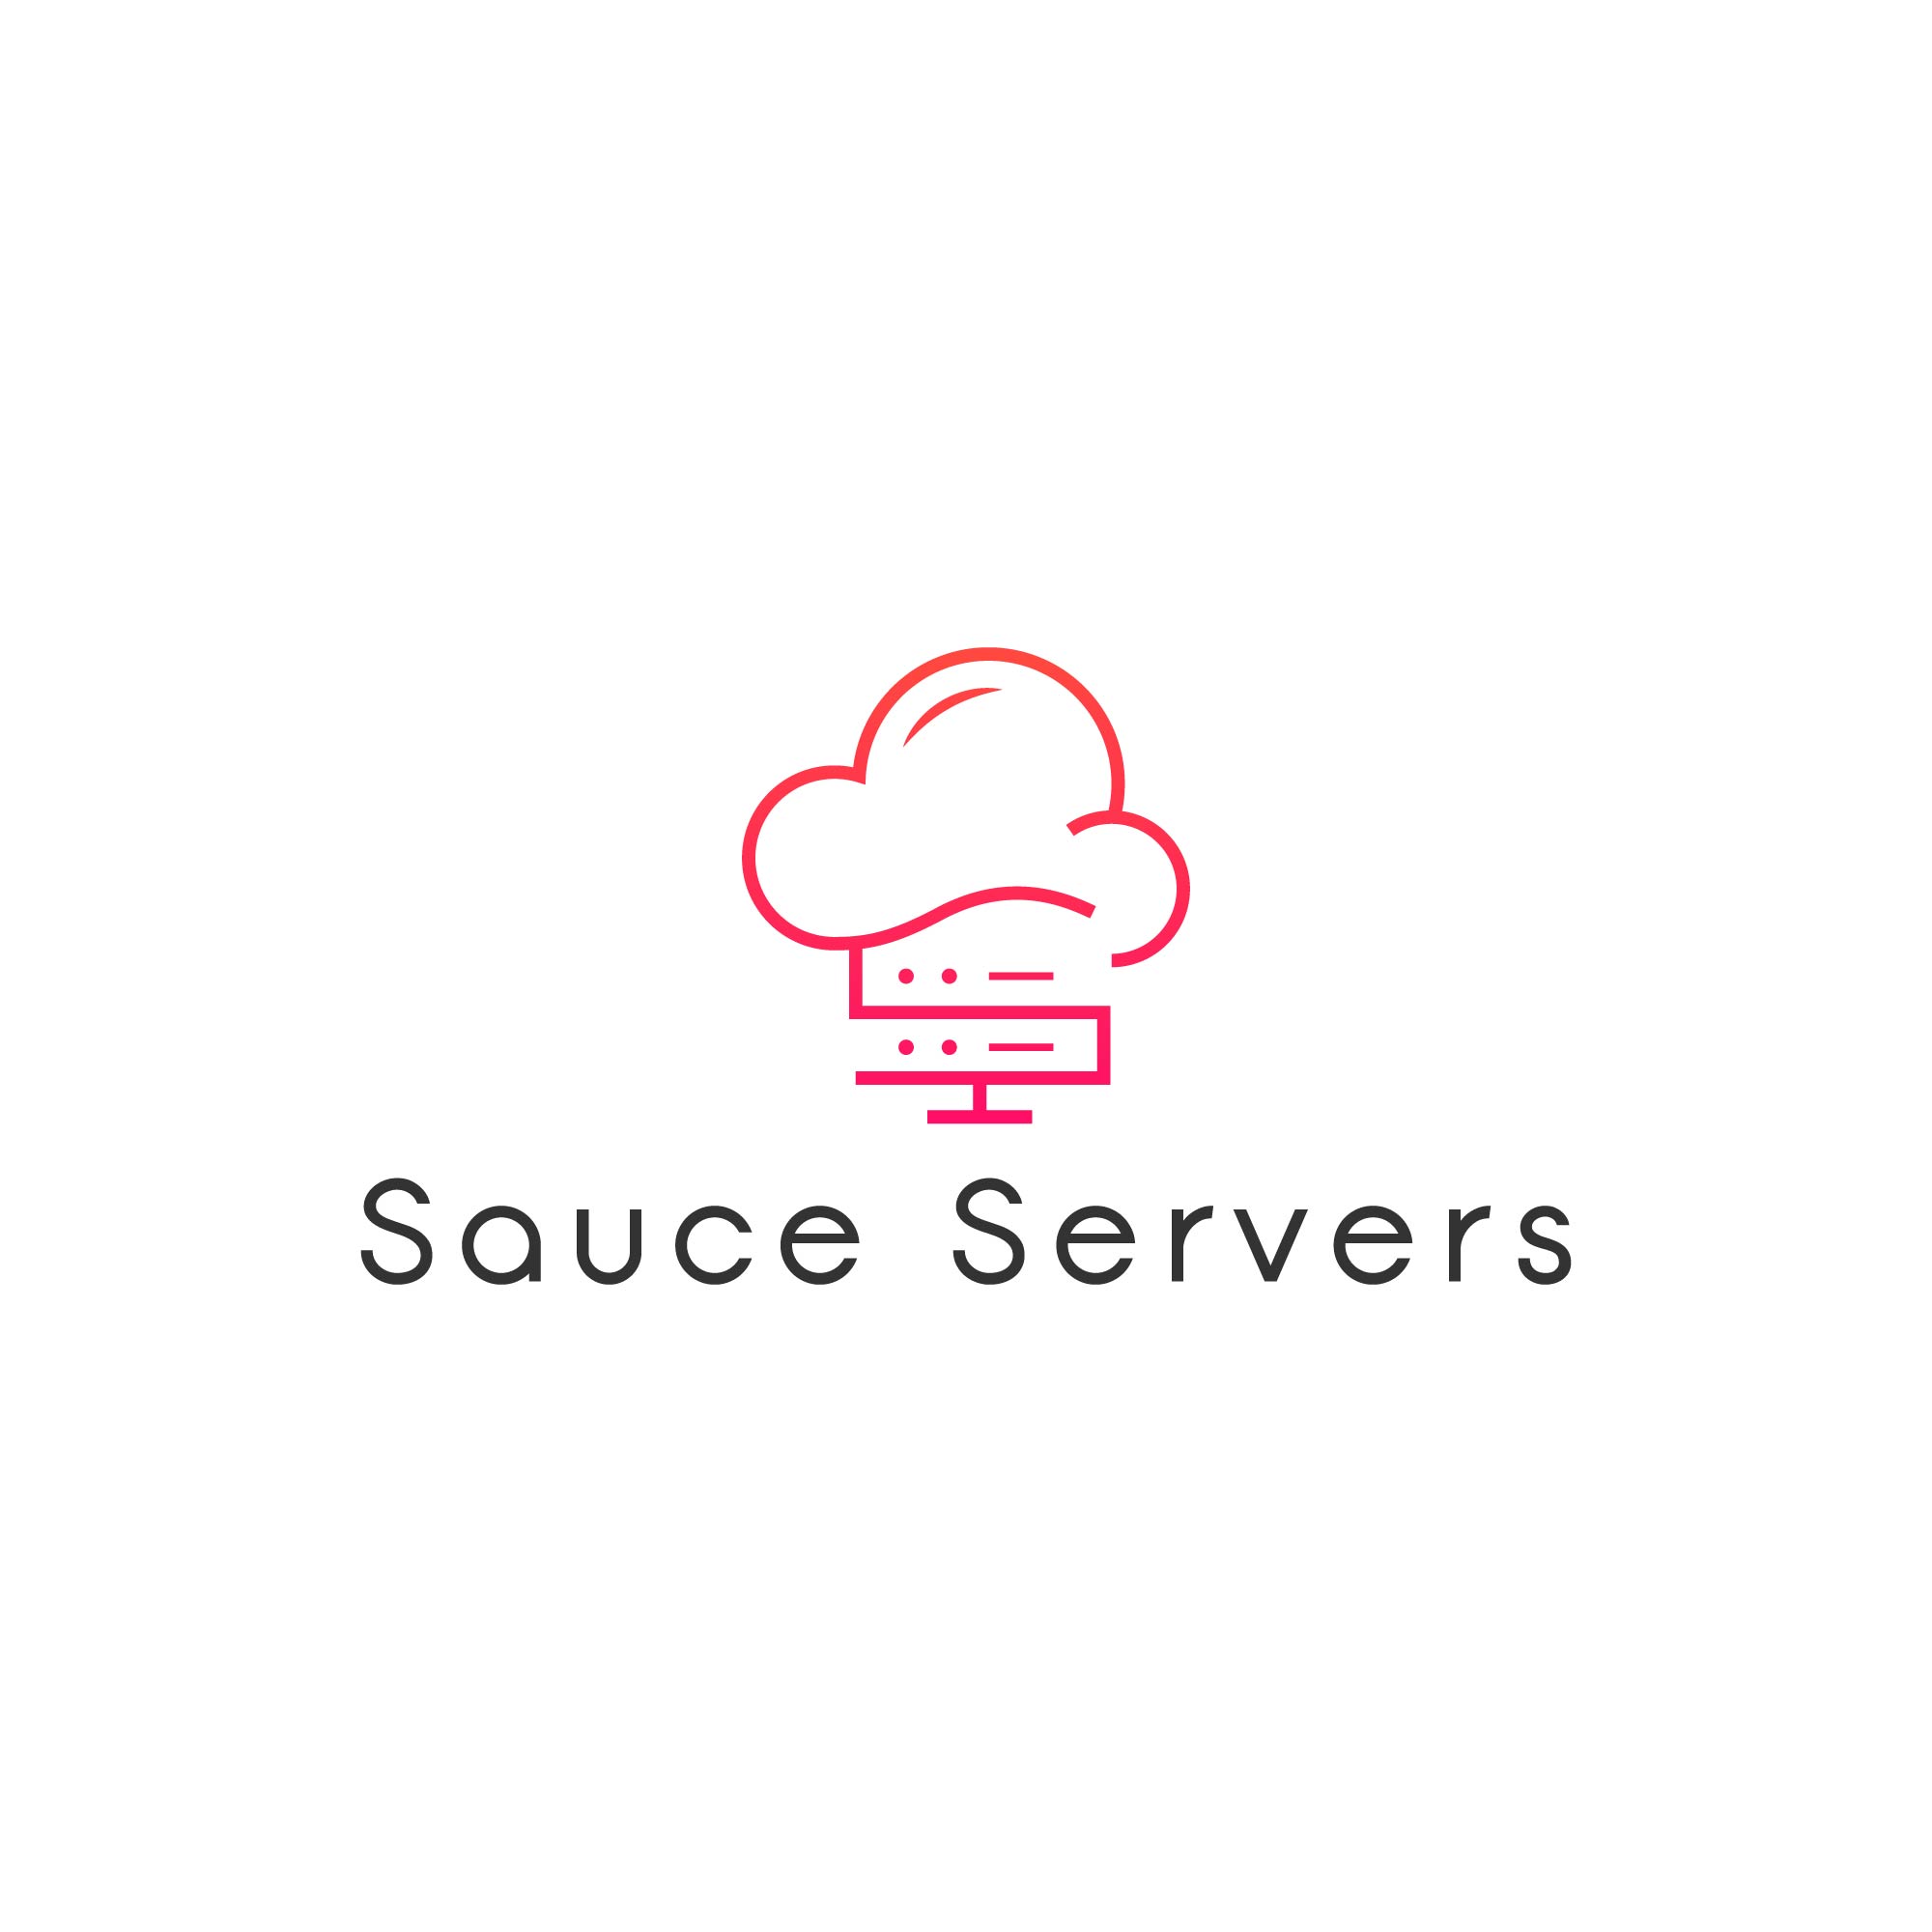 Sauce Servers